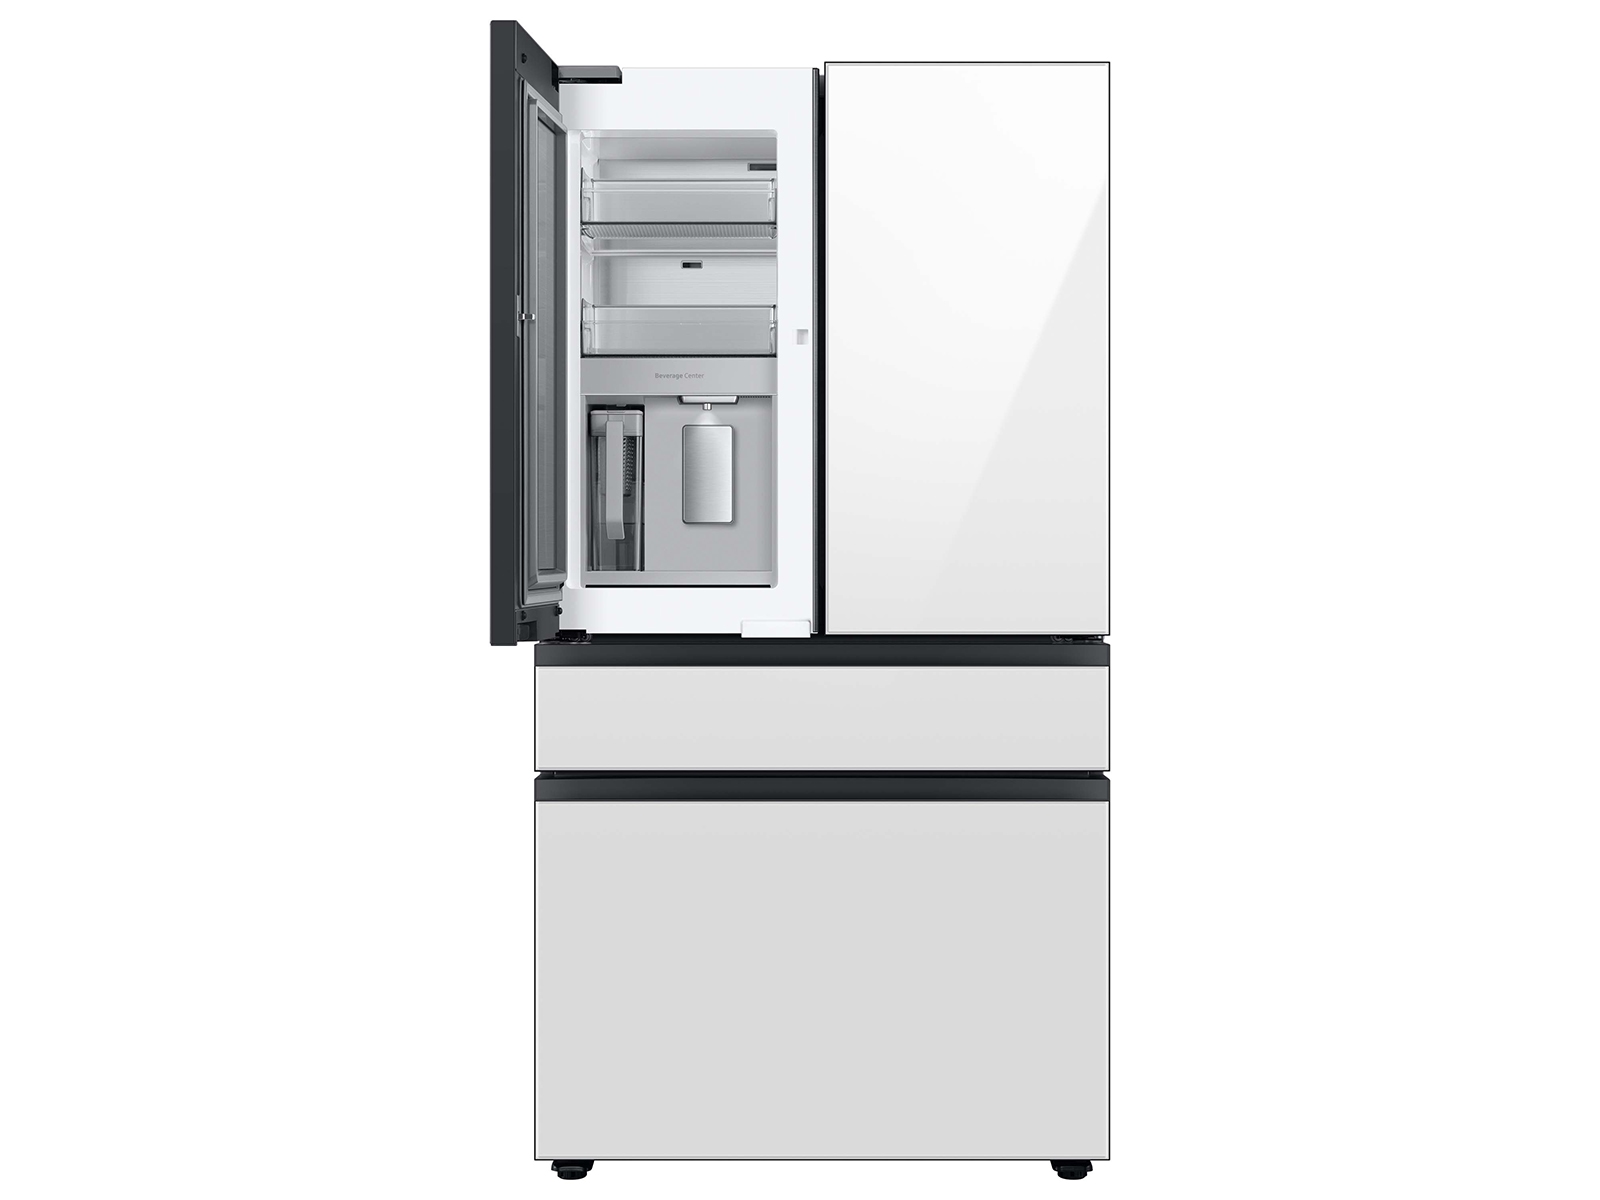 Samsung Electronics Announces First Bespoke French Door, Expanding Bespoke  Refrigerator Lineup - Samsung US Newsroom